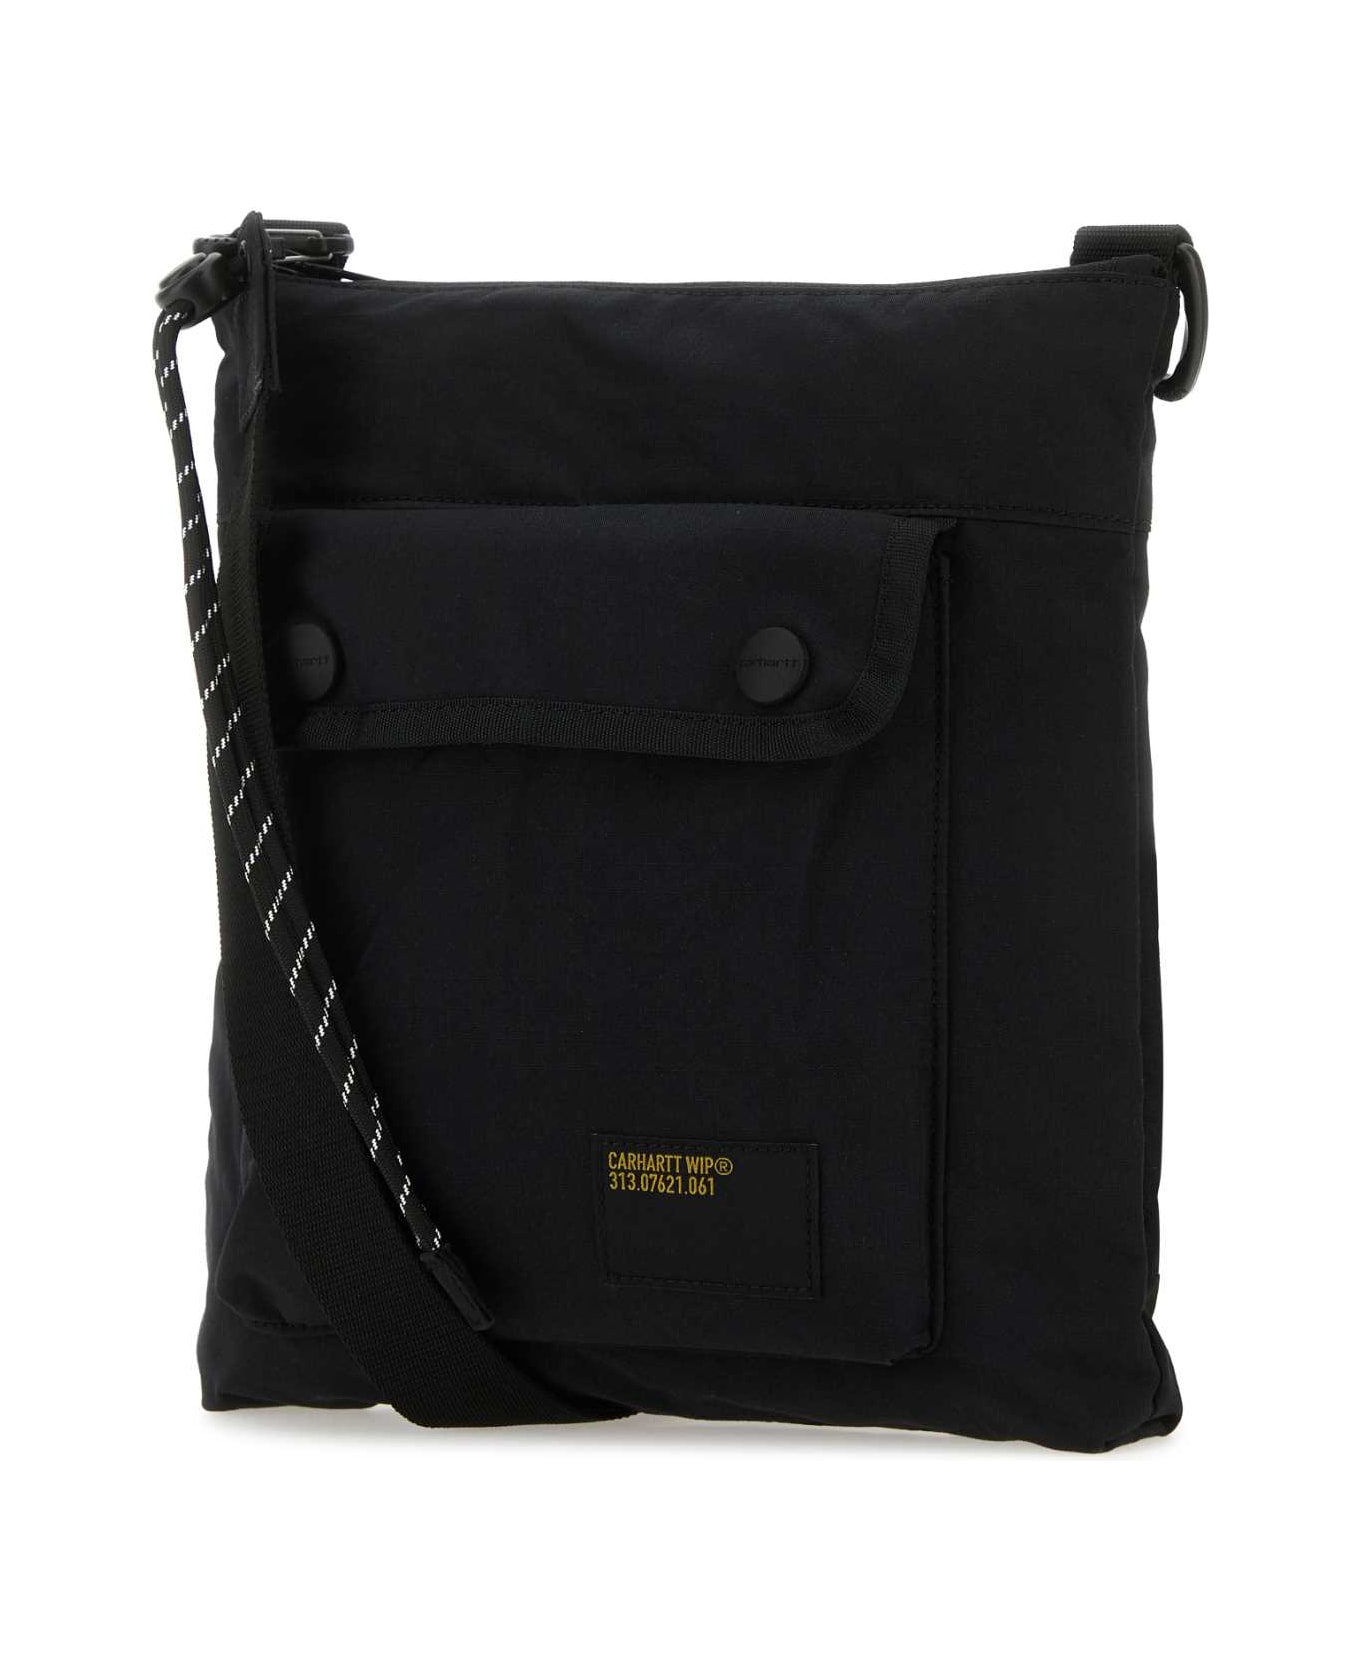 Carhartt Black Cotton Blend Haste Strap Bag - BLACK ショルダーバッグ